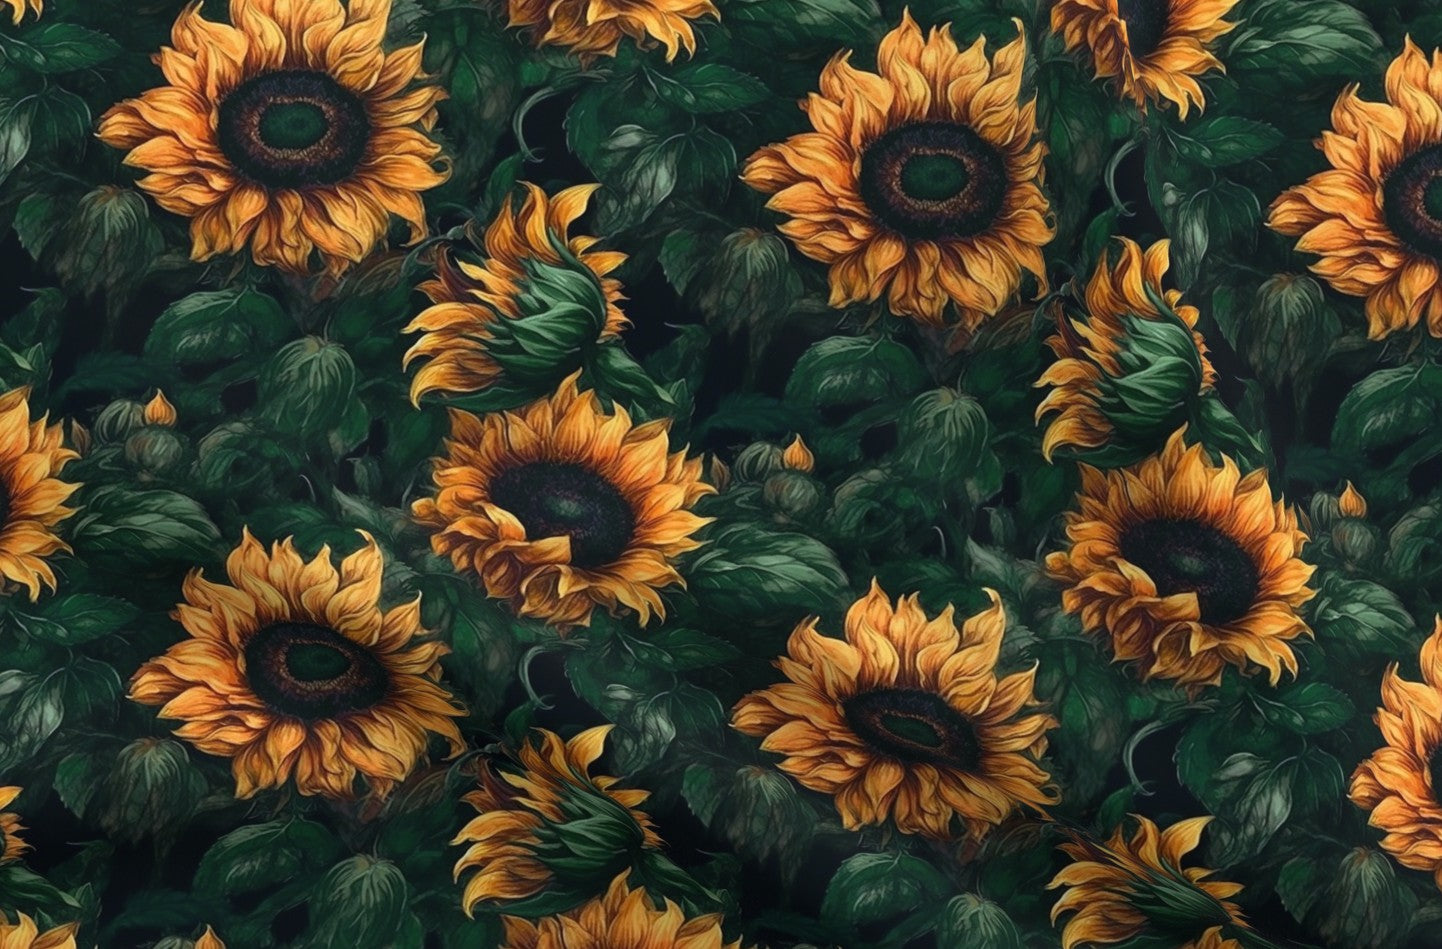 Watercolor Sunflowers (Lush) Printed Fabric by Studio Ten Design